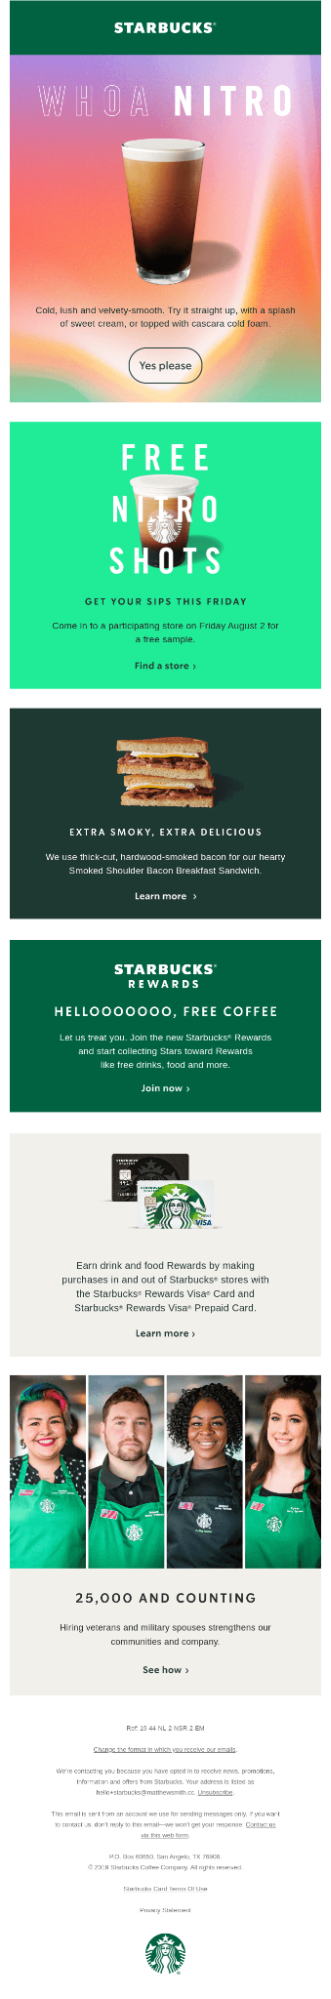 Starbucks-email template